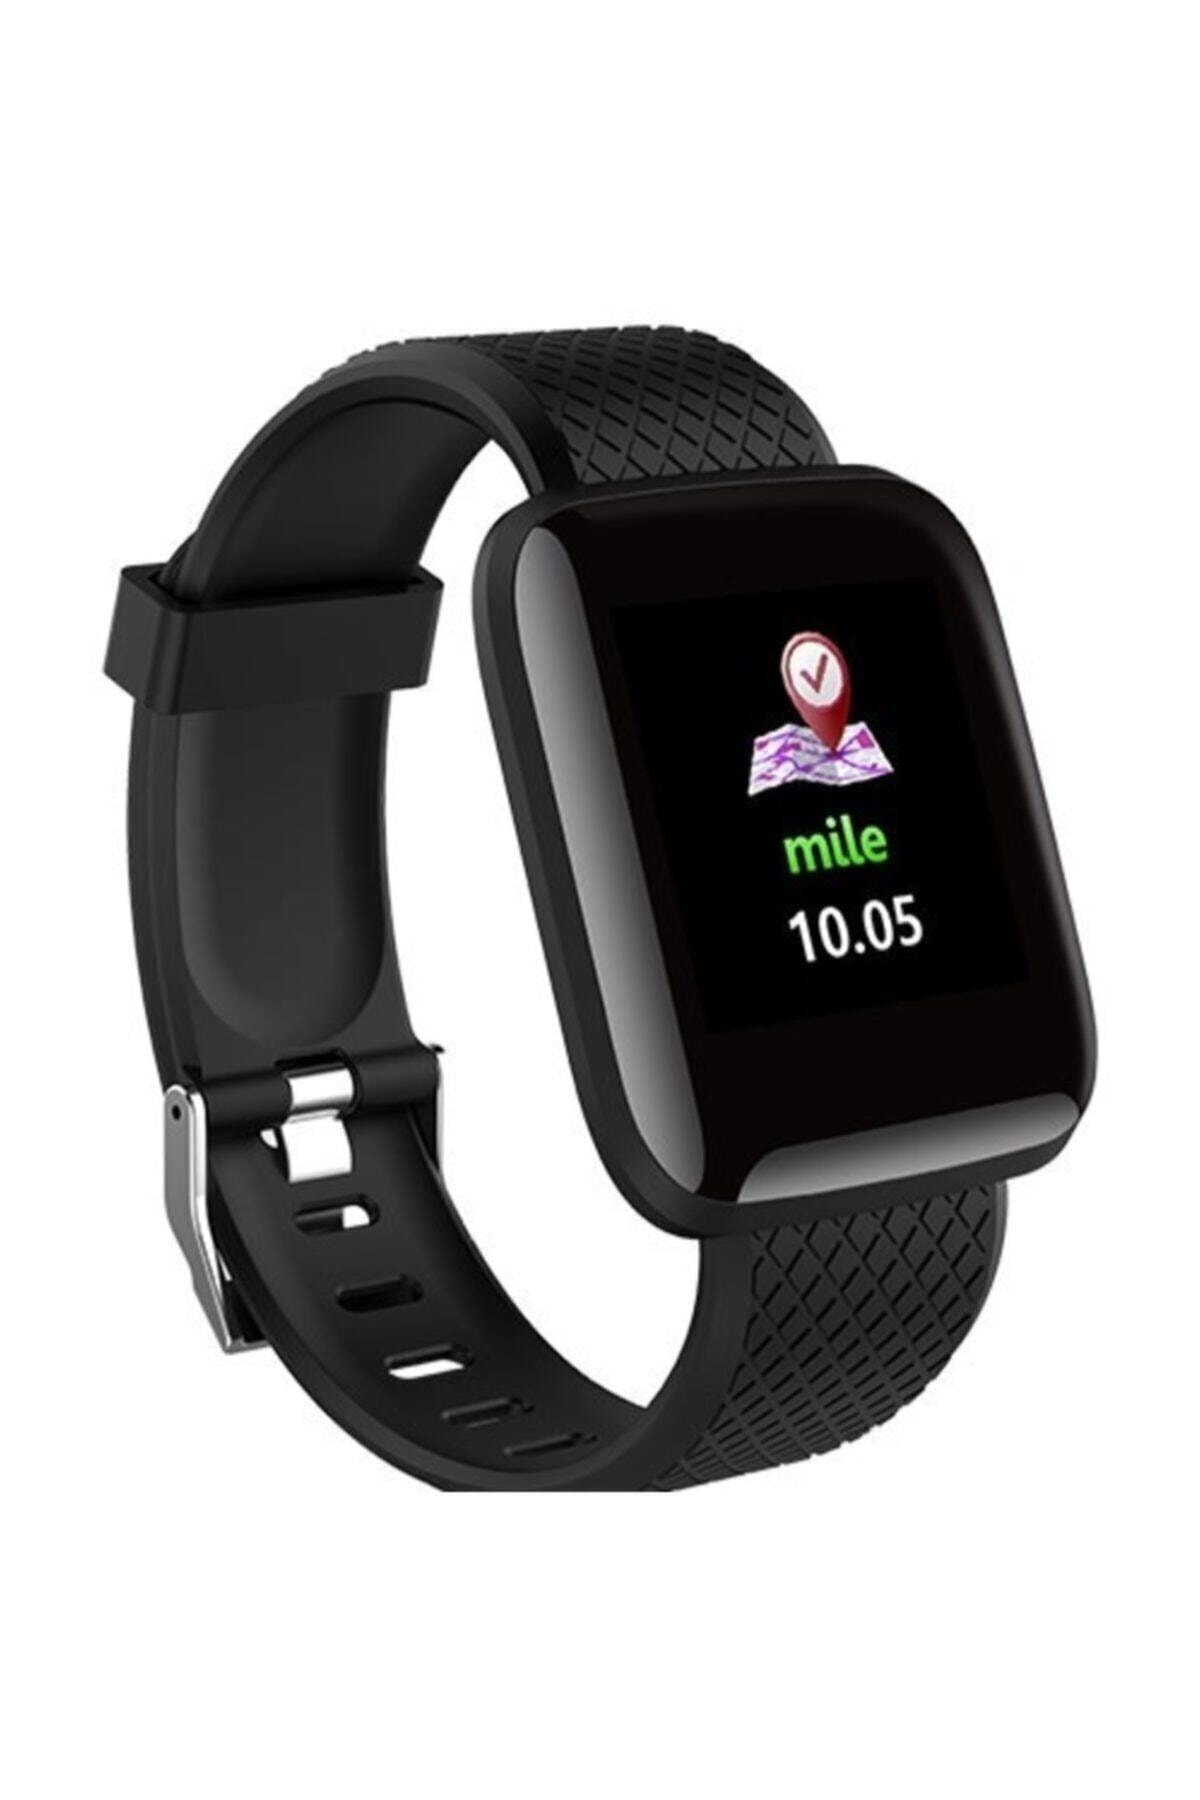 Everest Ever Watch Ew-508 Android/ıos Smart Watch Kalp Atışı Sensörlü Akıllı Saat